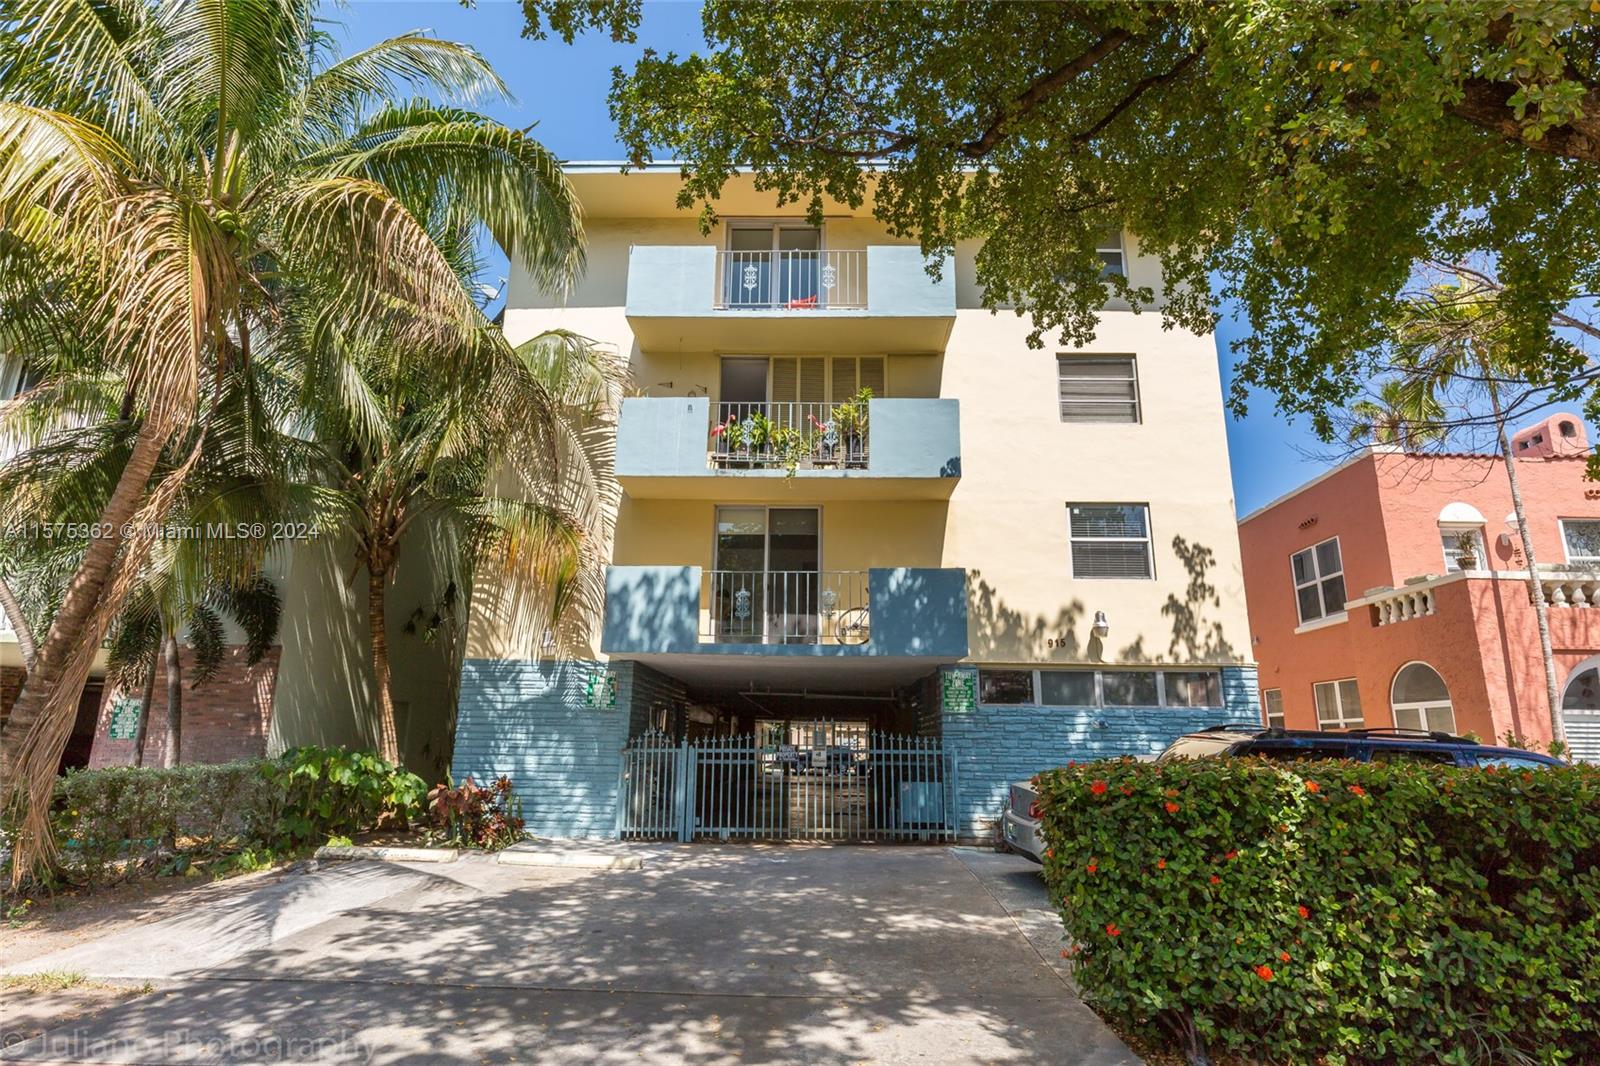 Rental Property at 915 Jefferson Ave 2A, Miami Beach, Miami-Dade County, Florida - Bedrooms: 1 
Bathrooms: 1  - $2,050 MO.